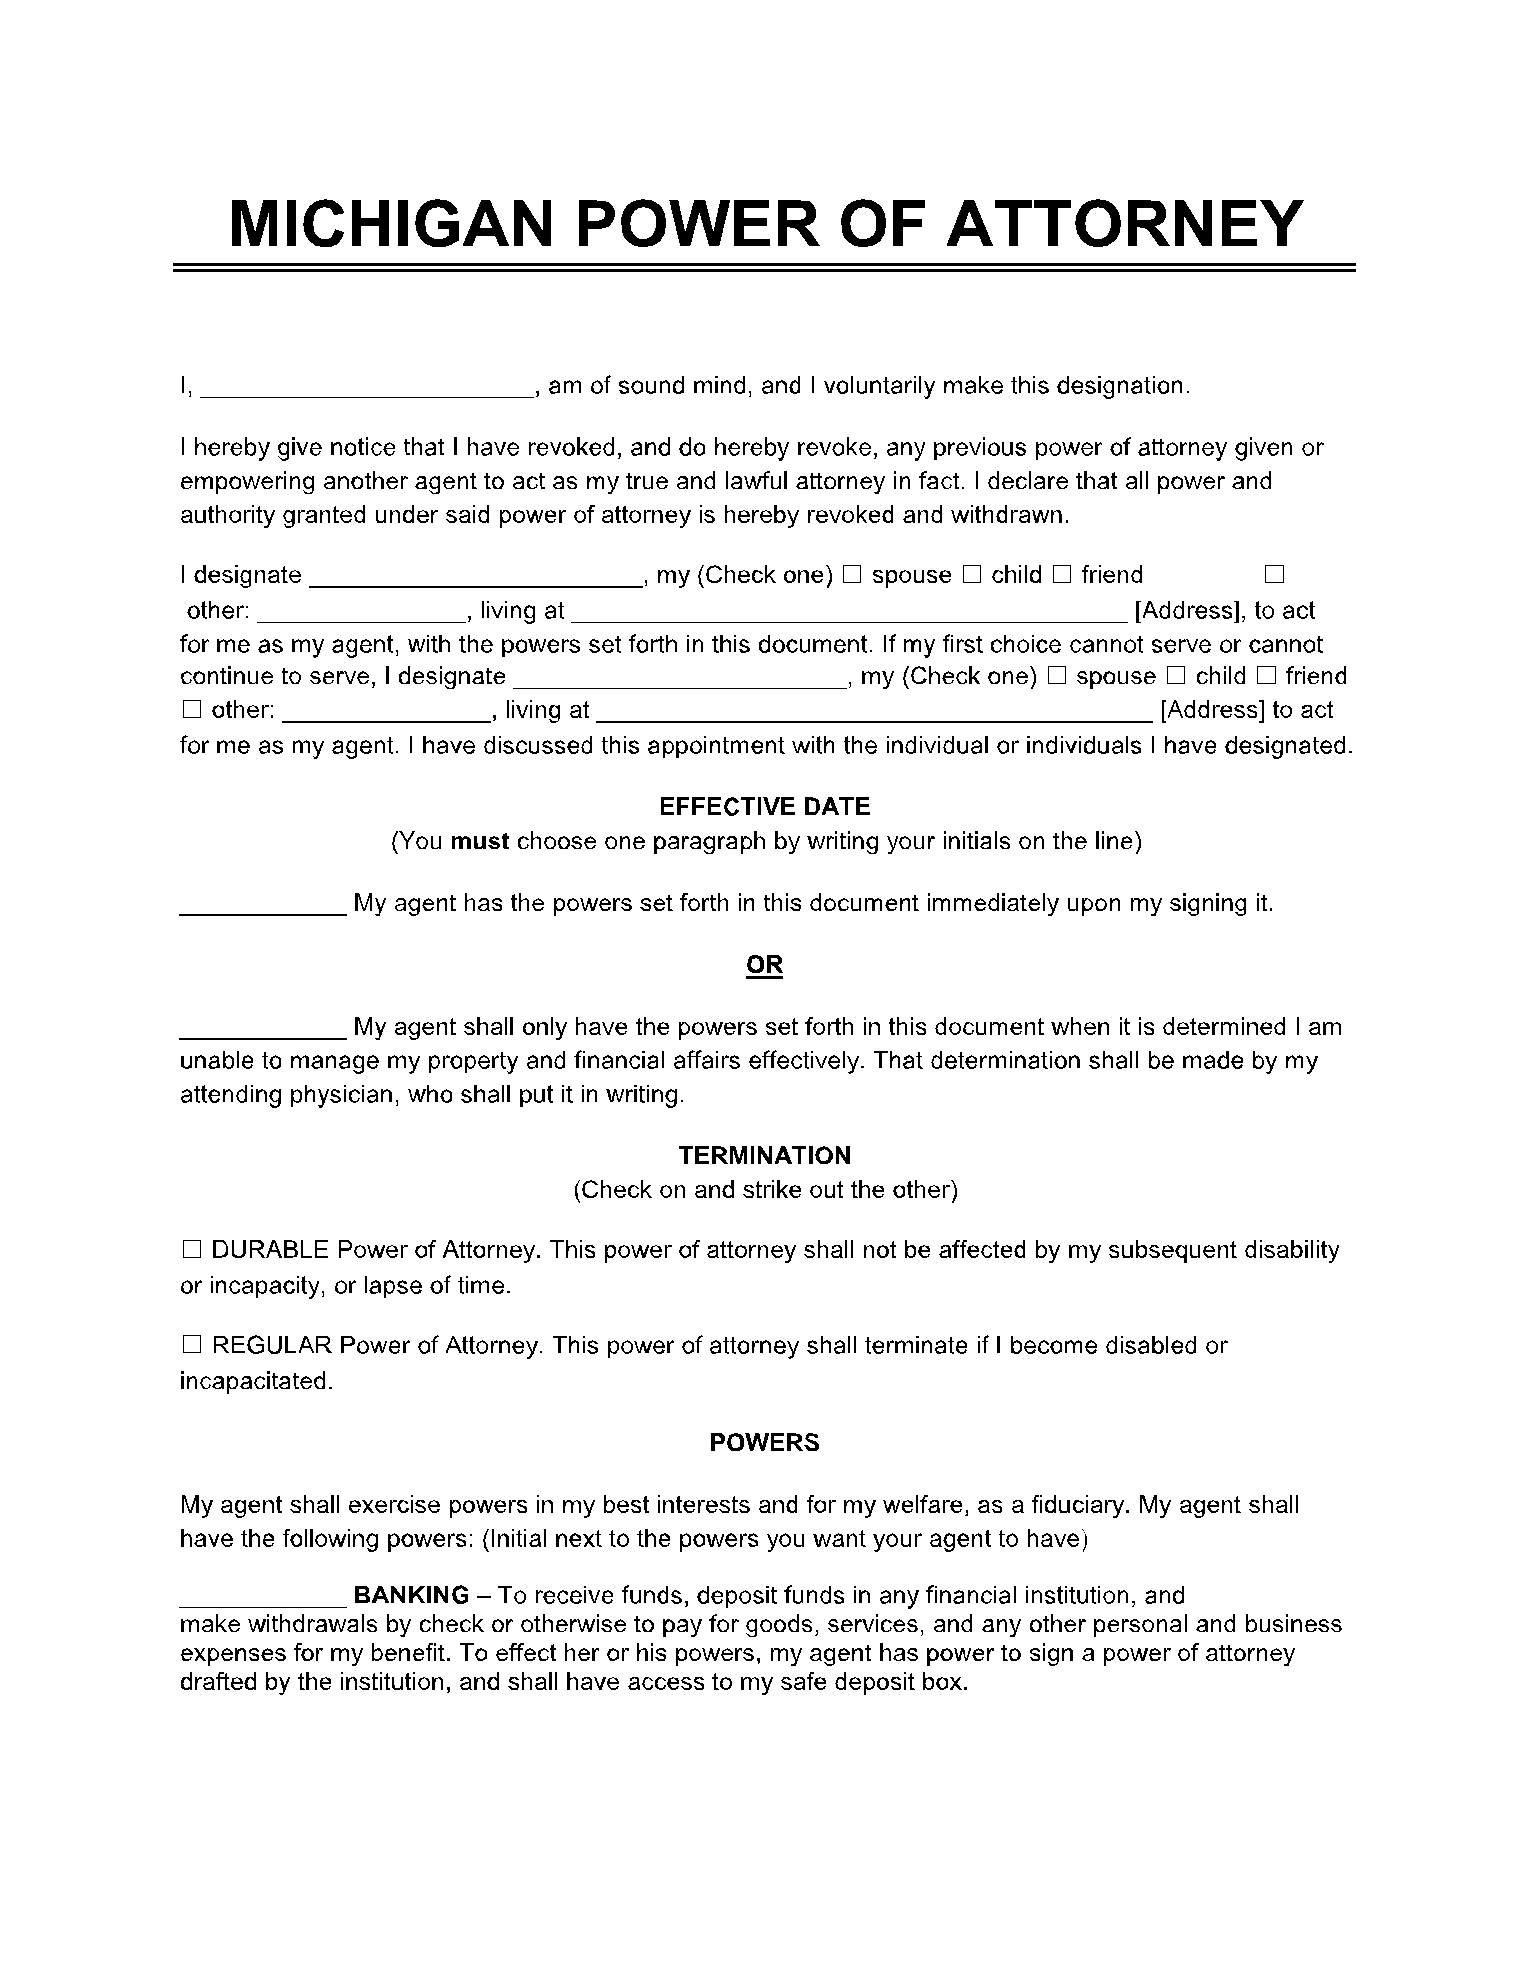 Power of Attorney in Michigan